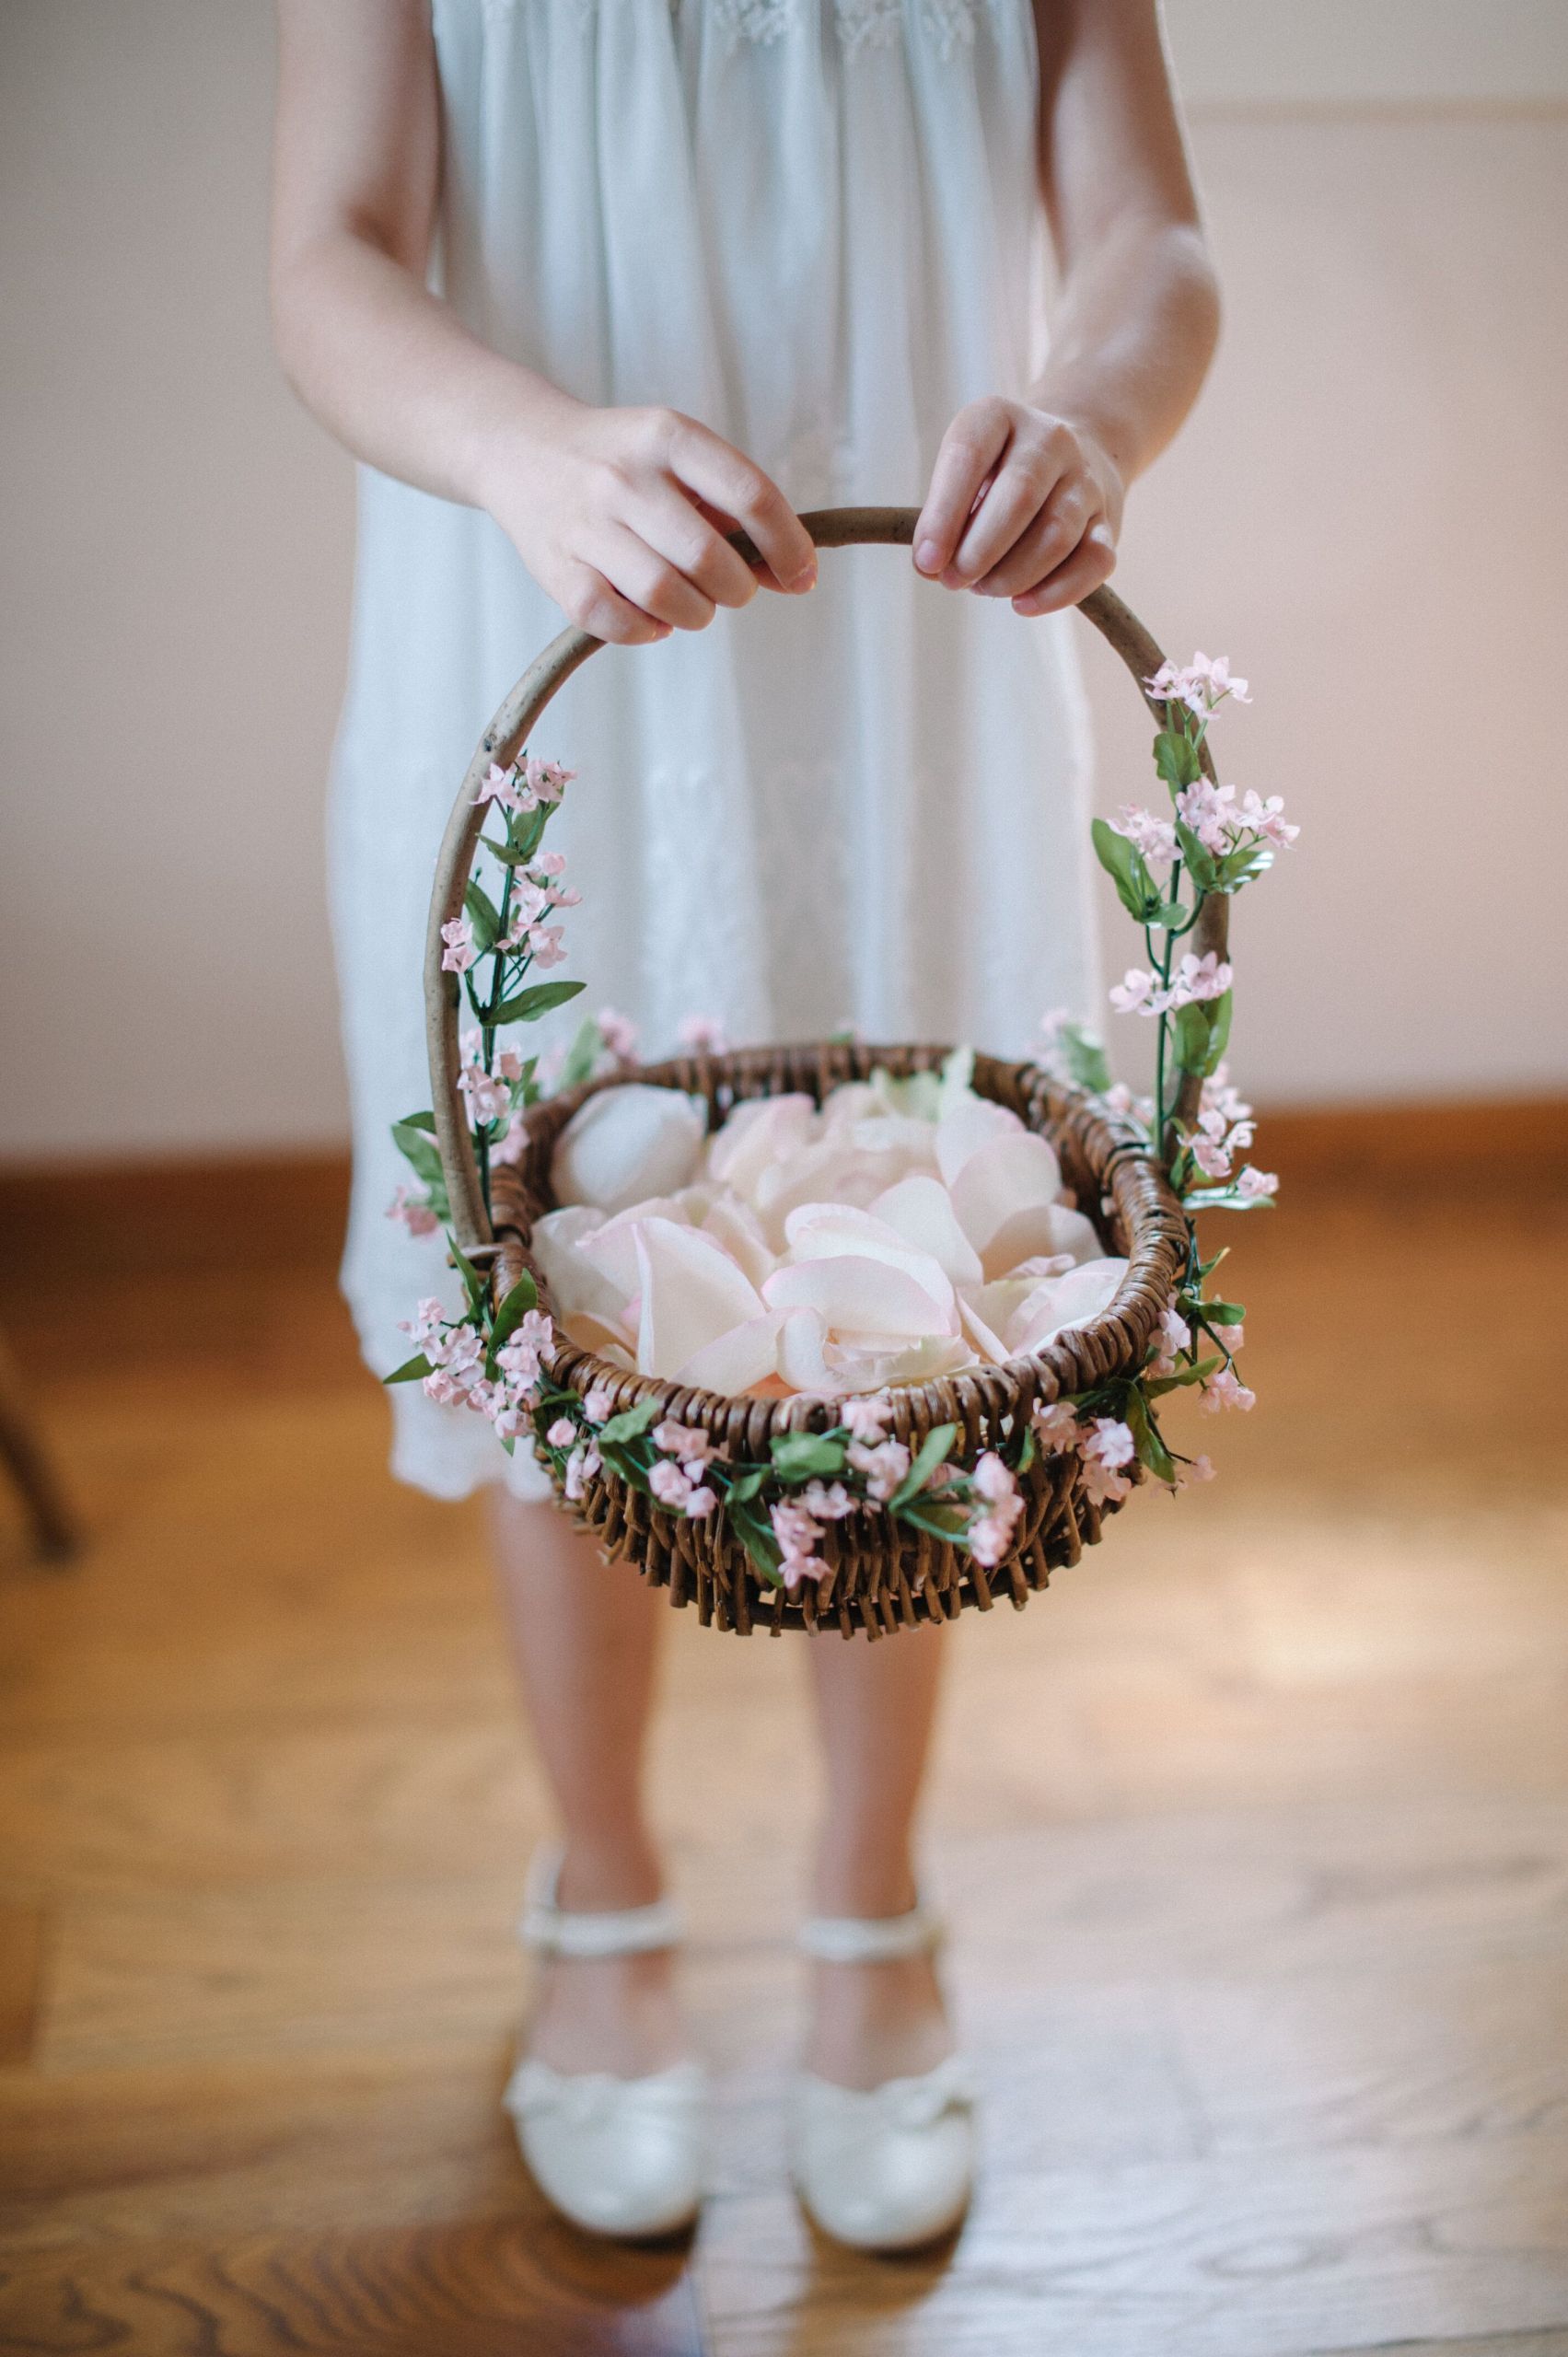 Wedding Flower Girl Basket
 Flower Girl Basket With Pink Flowers